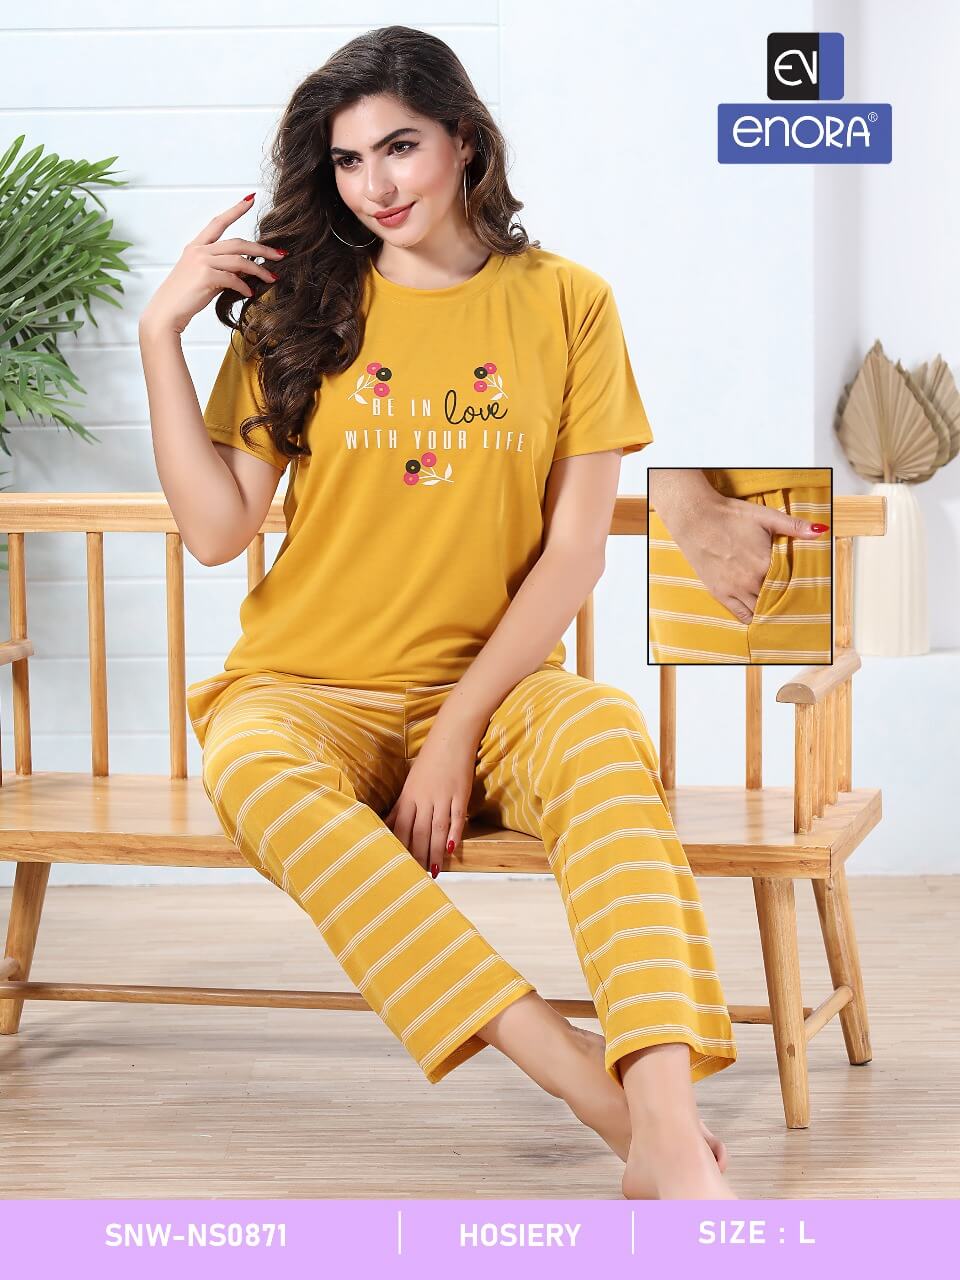 Enora Tshirt With Lining Payjama Night Dress Catalog collection 5